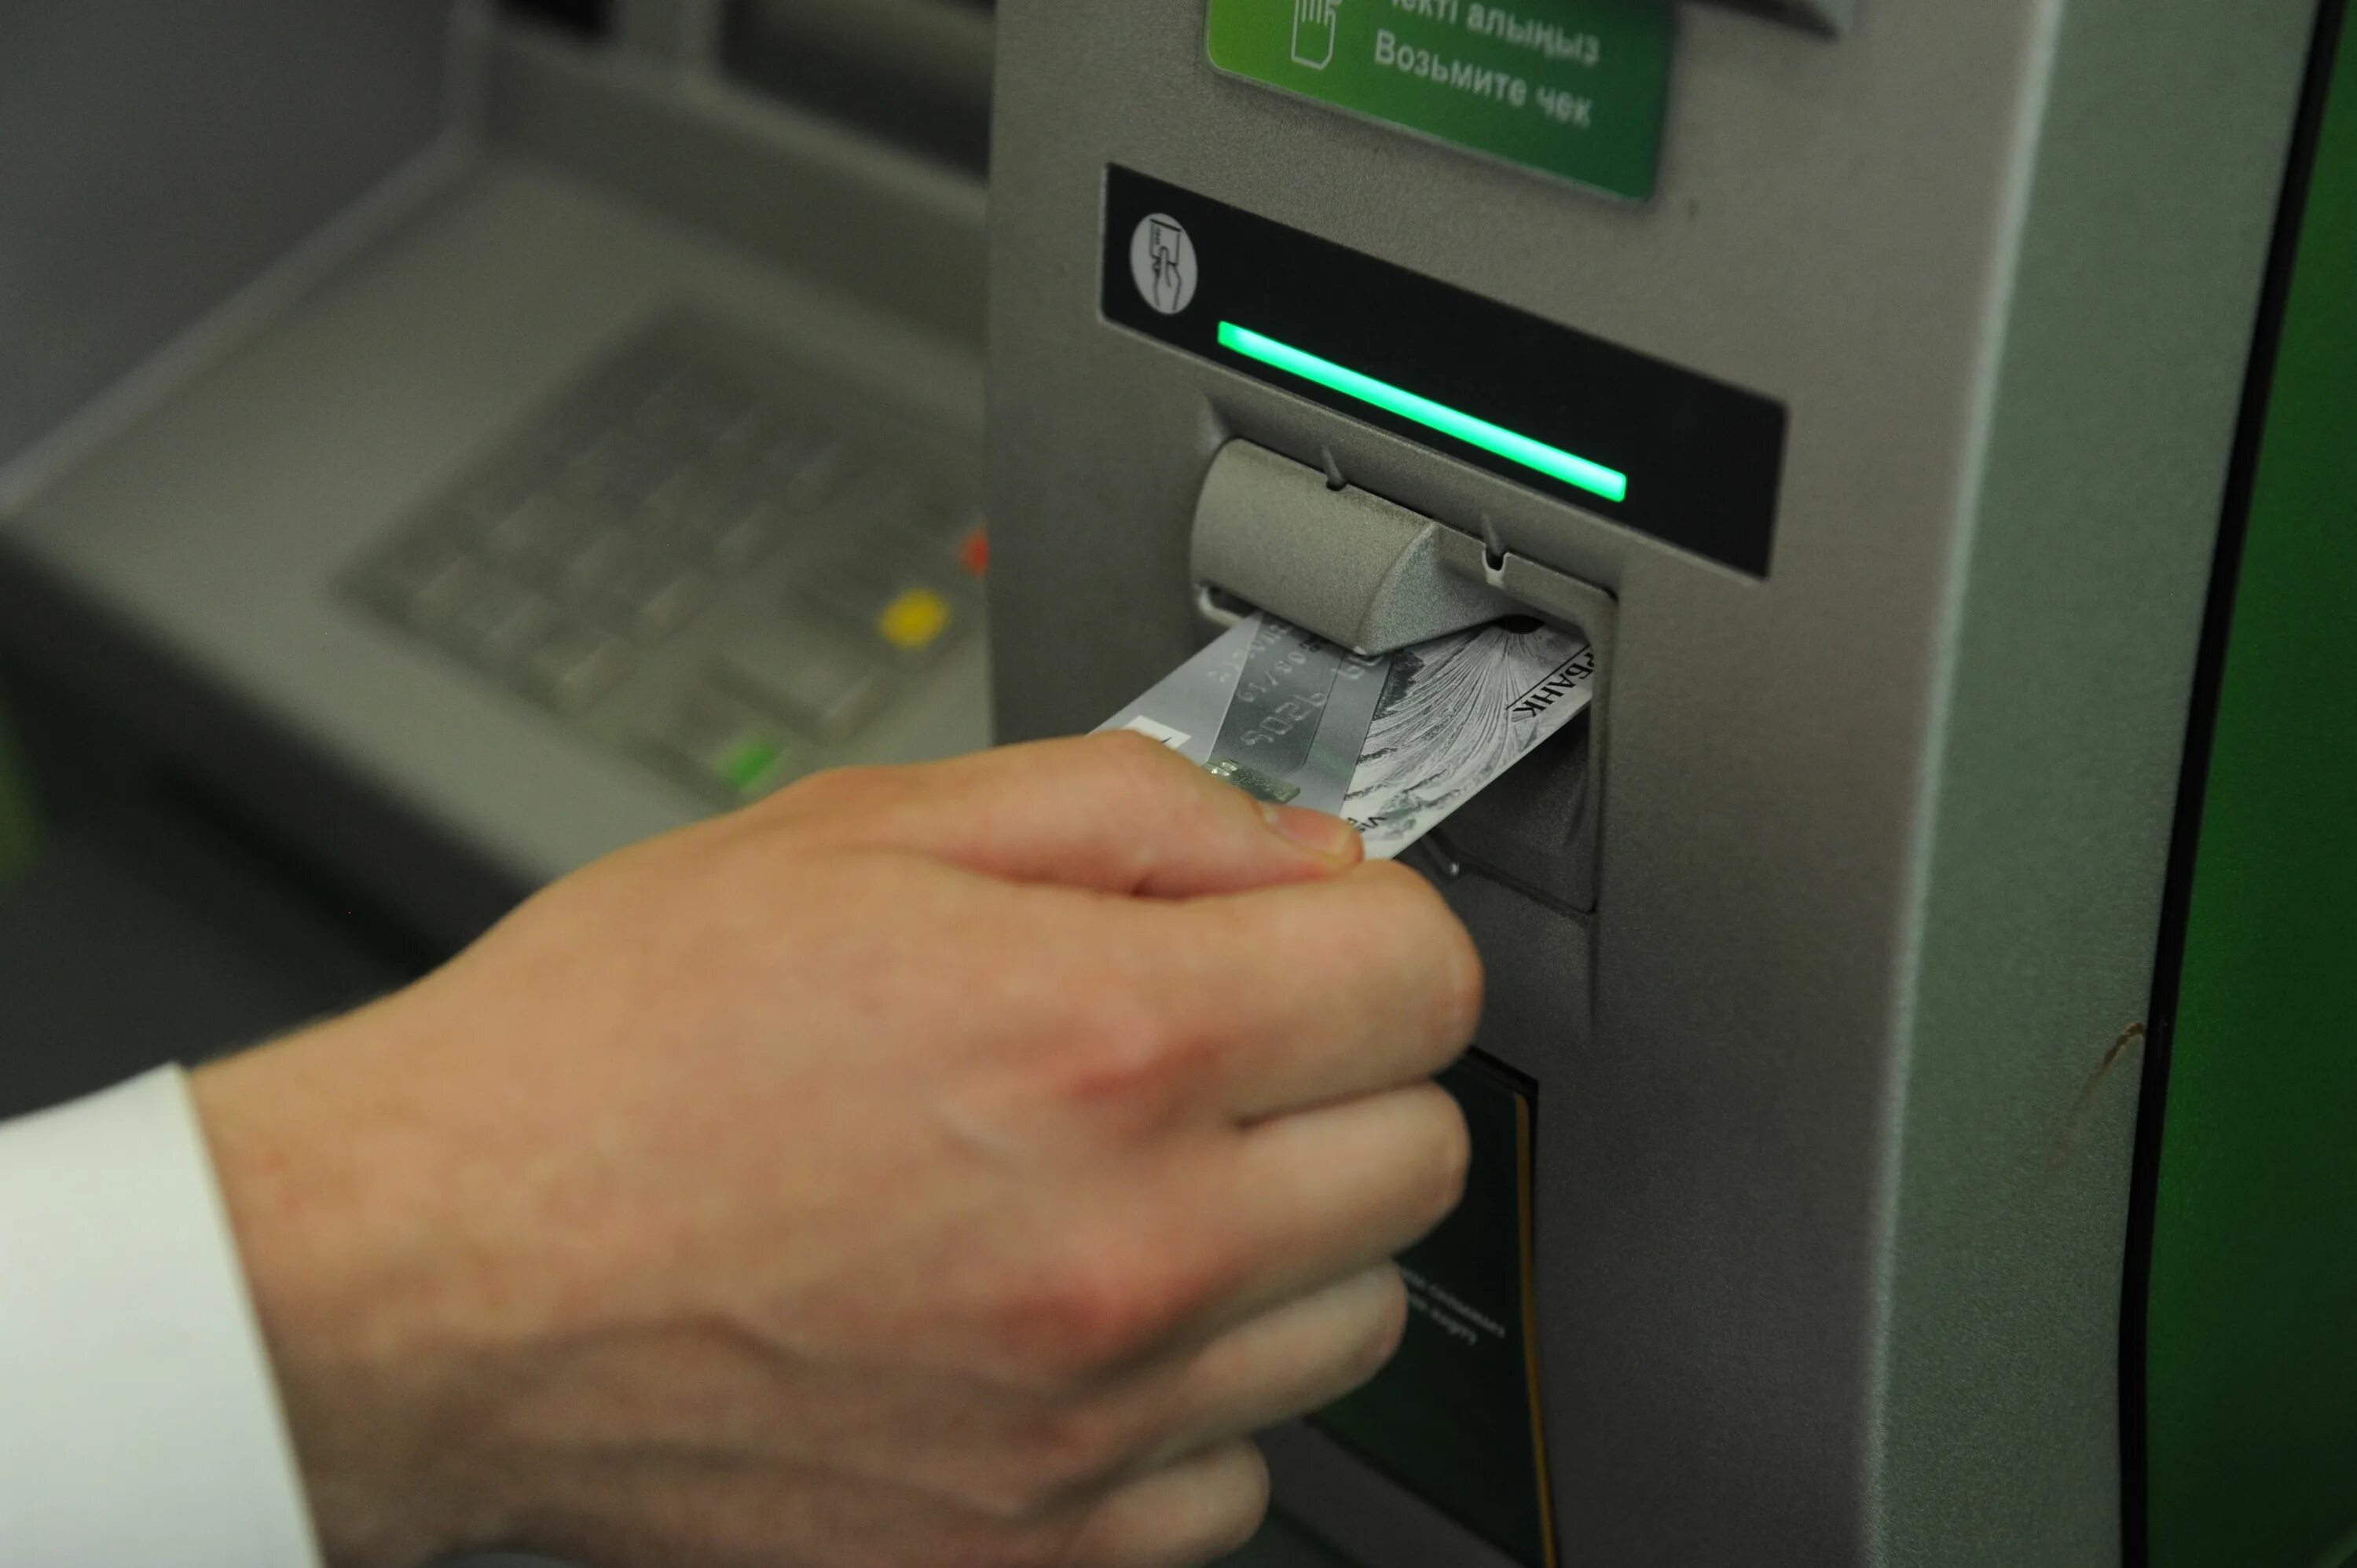 Снятие денег через банкомат